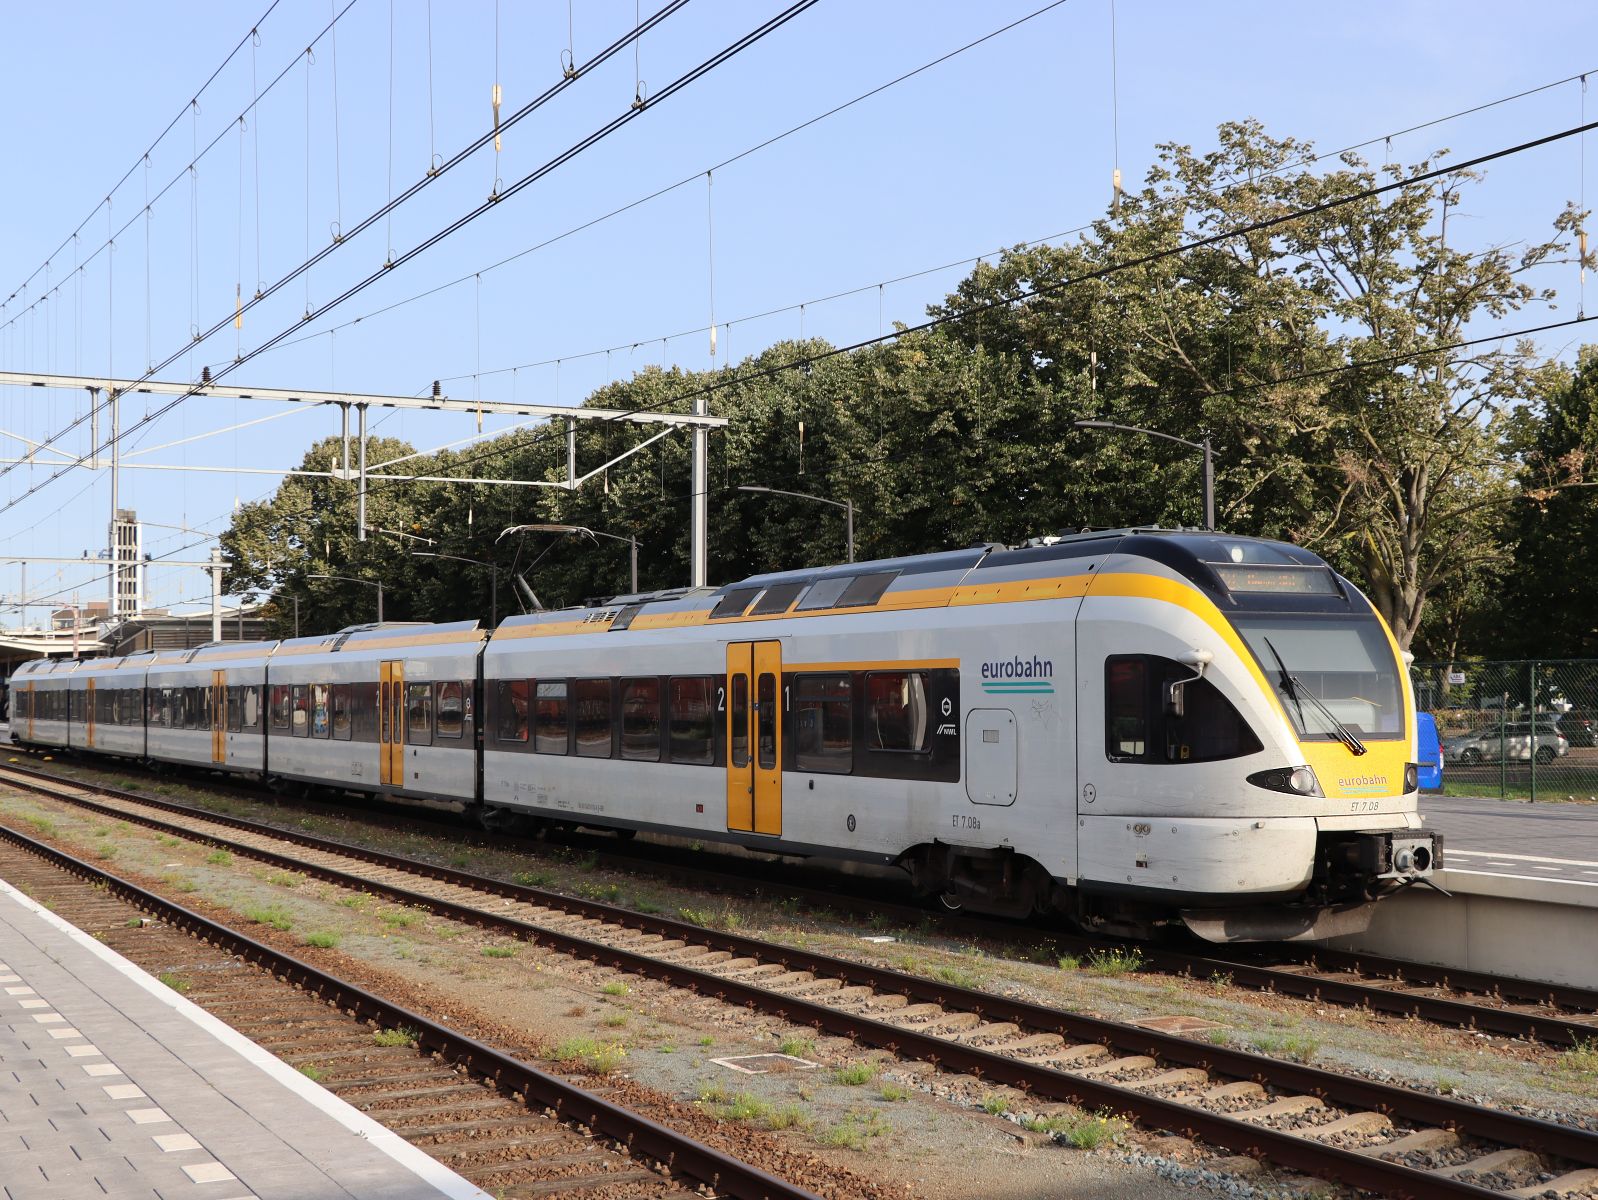 Eurobahn Triebzug FLIRT ET 7 08 (429 013-6) Gleis 1 Bahnhof Venlo, Niederlande 28-09-2023.

Eurobahn treinstel FLIRT ET 7 08 (429 013-6) spoor 1 station Venlo 28-09-2023.